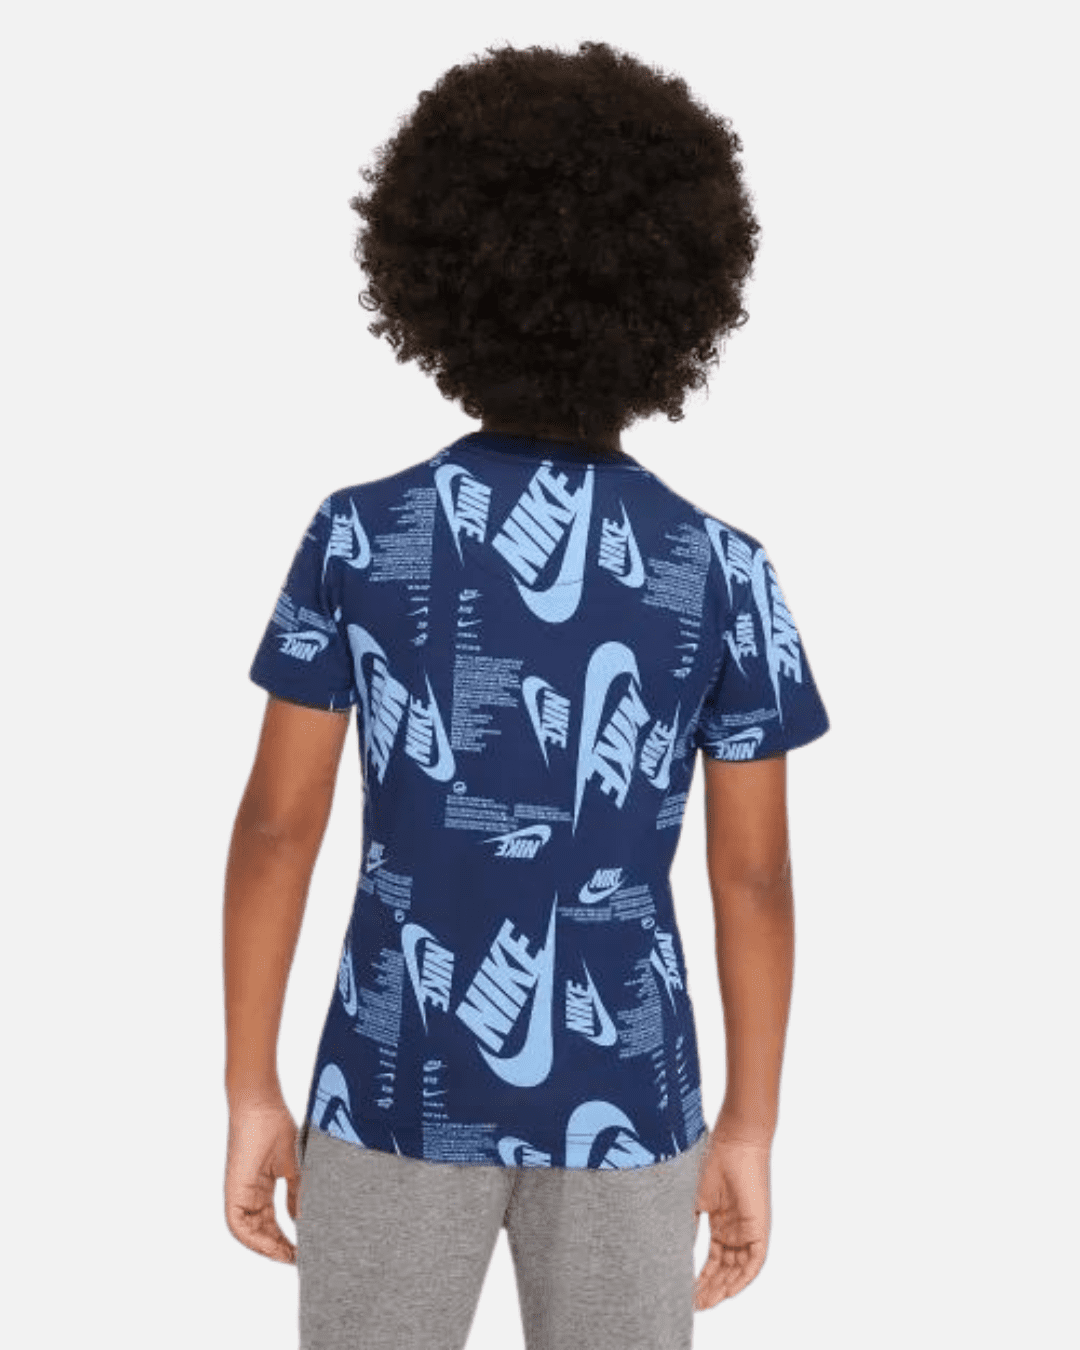 T-shirt Nike Futura Branding Enfant - Bleu